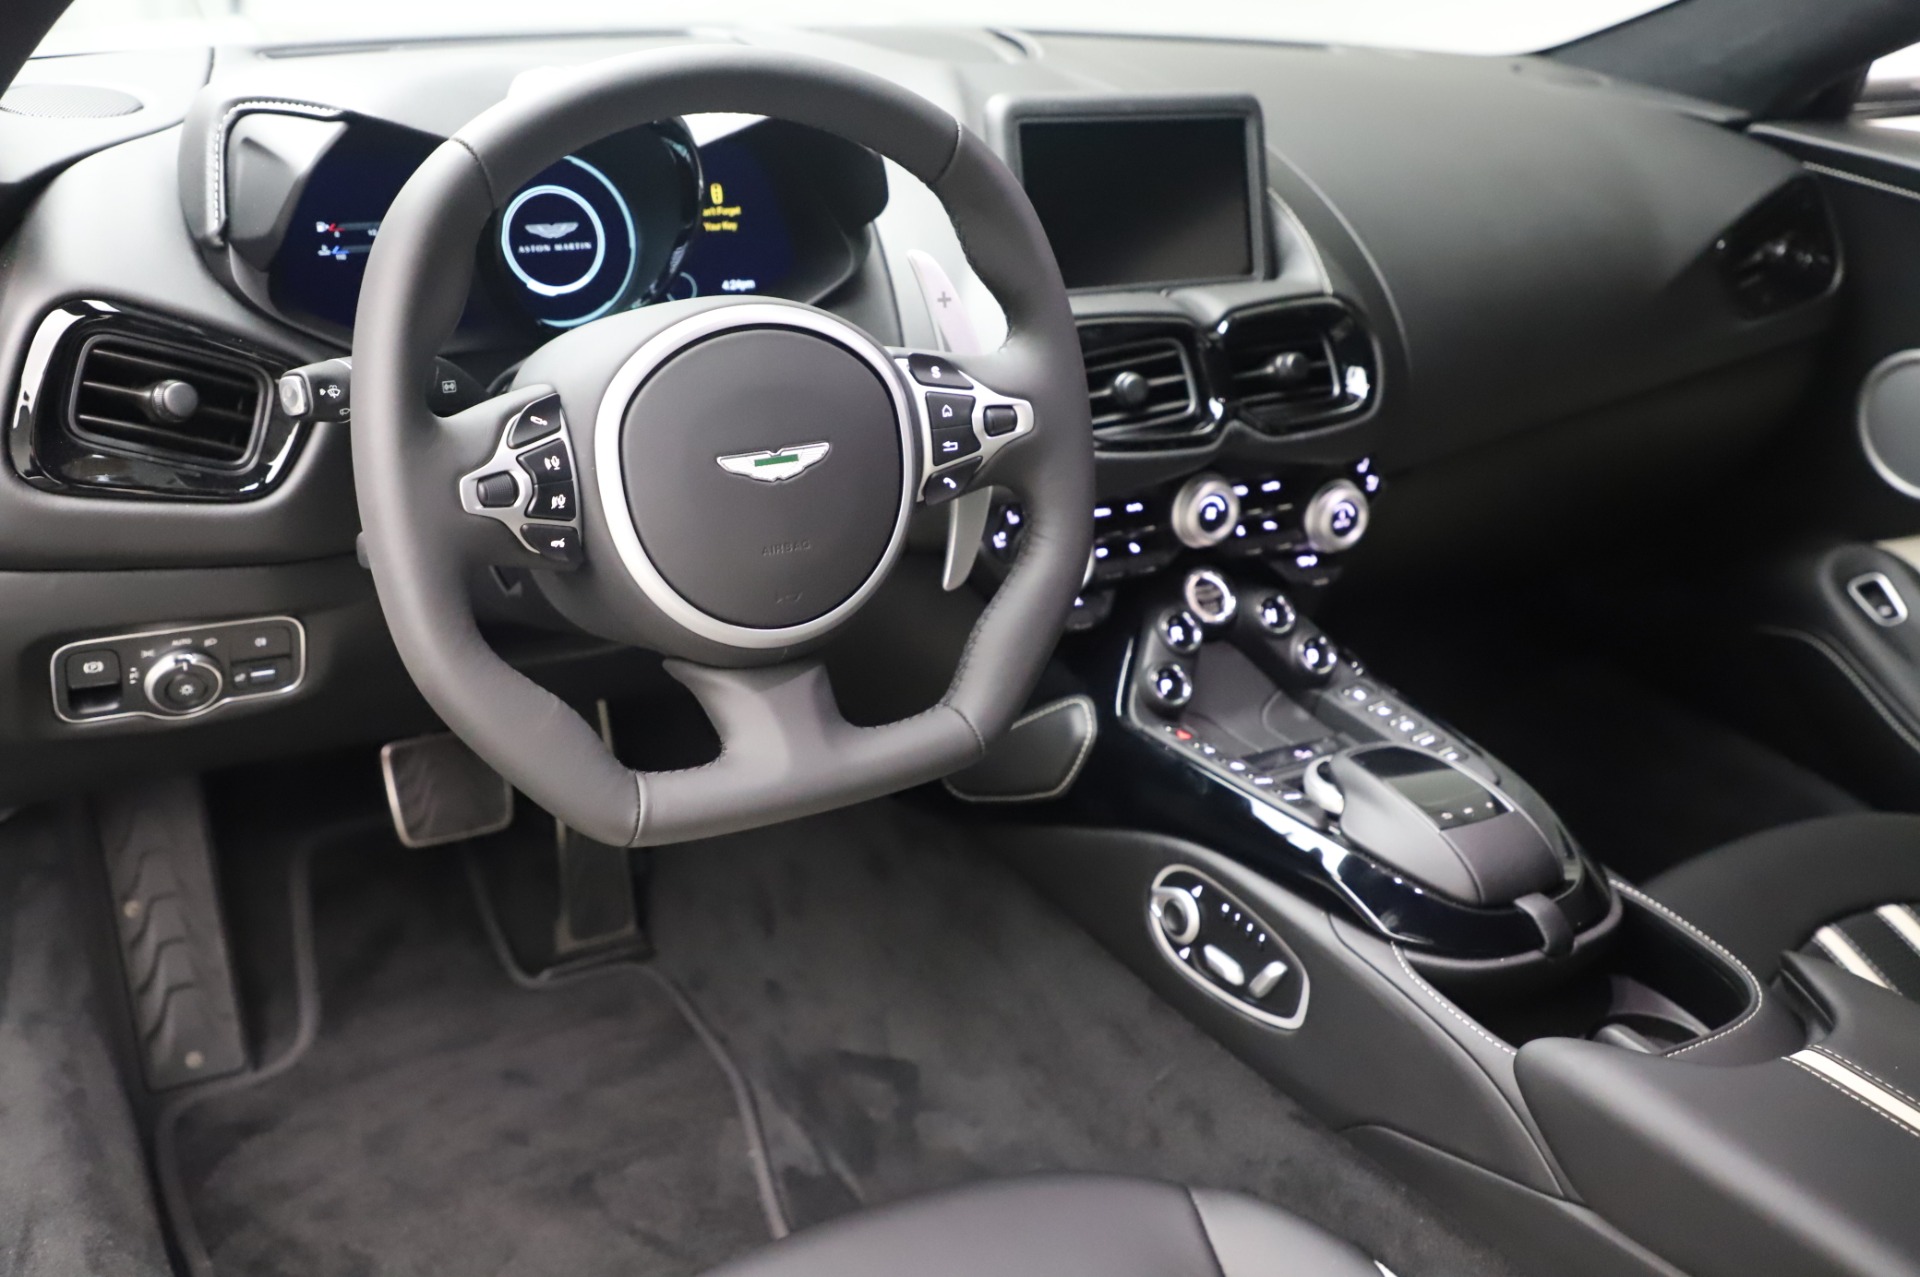 New 2020 Aston Martin Vantage For Sale (Special Pricing) | Aston Martin